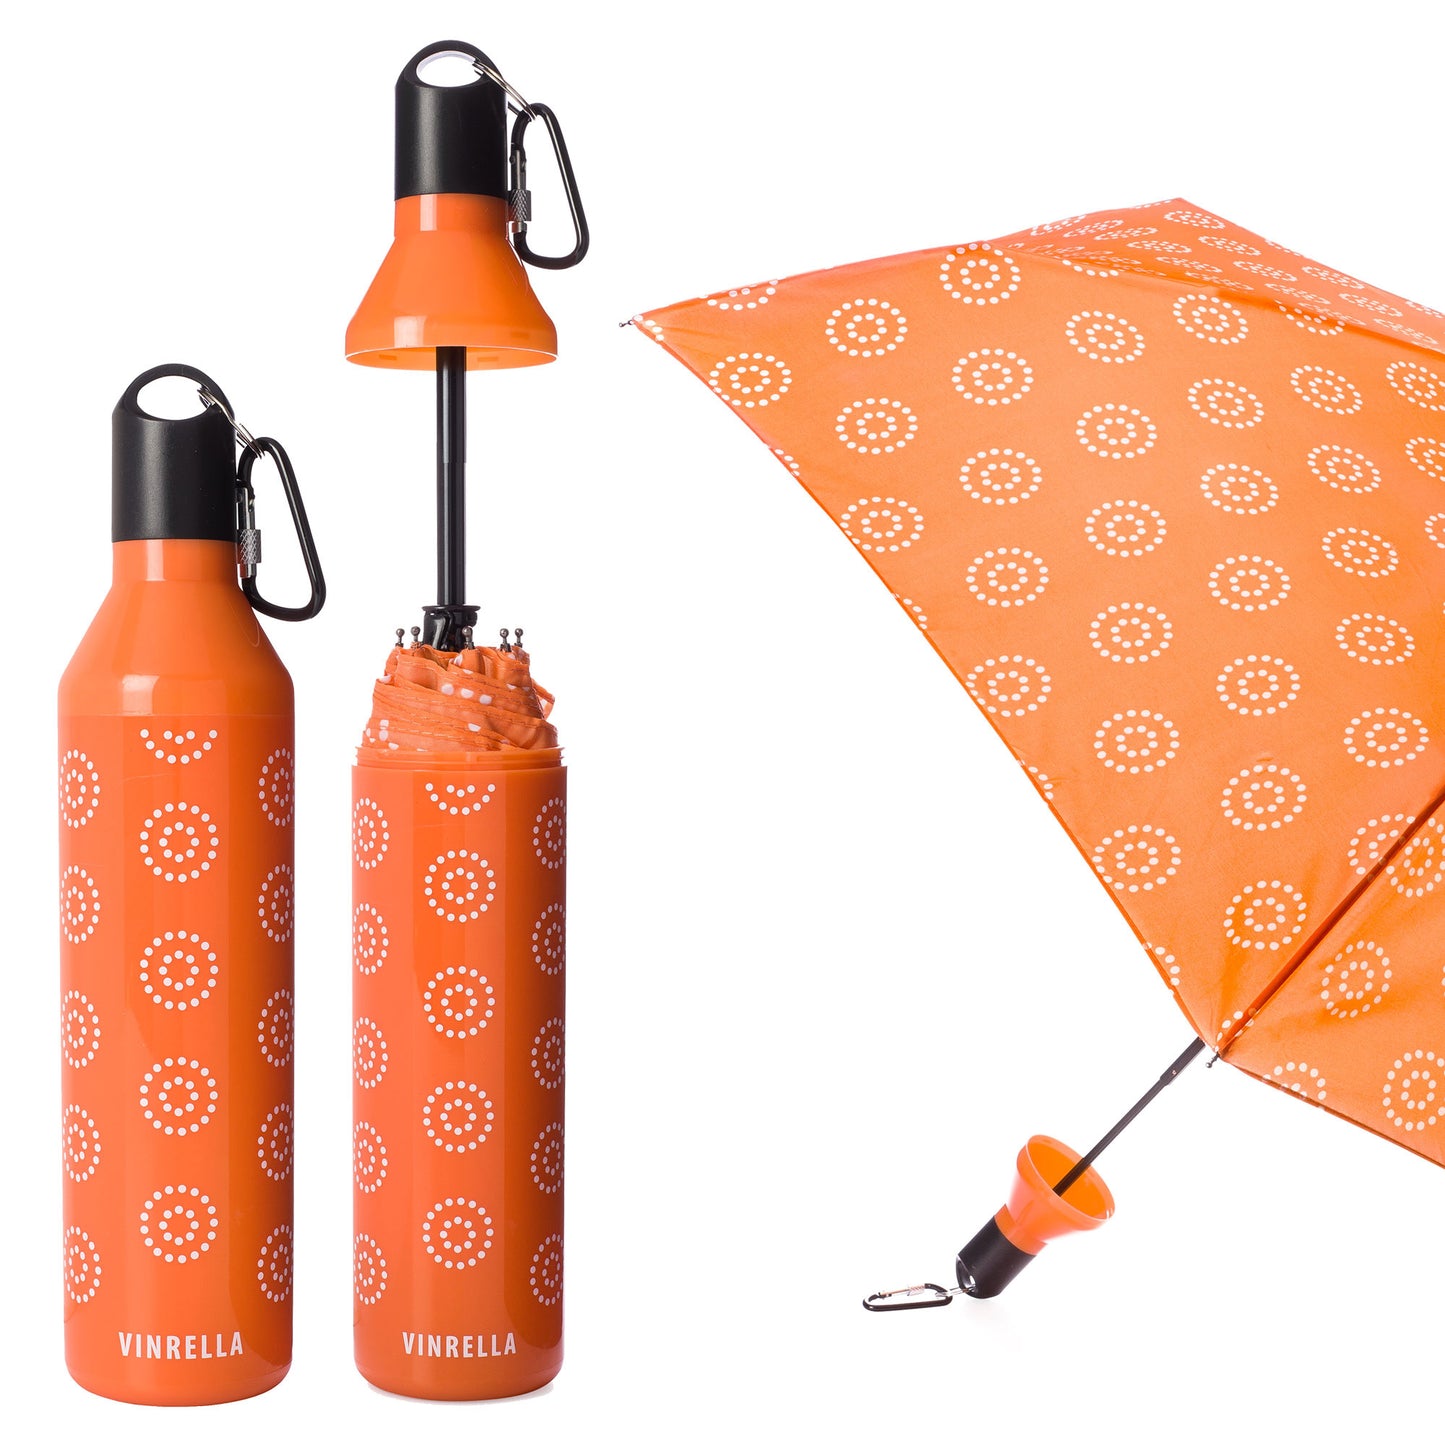 Vinrella: Umbrella In A Bottle